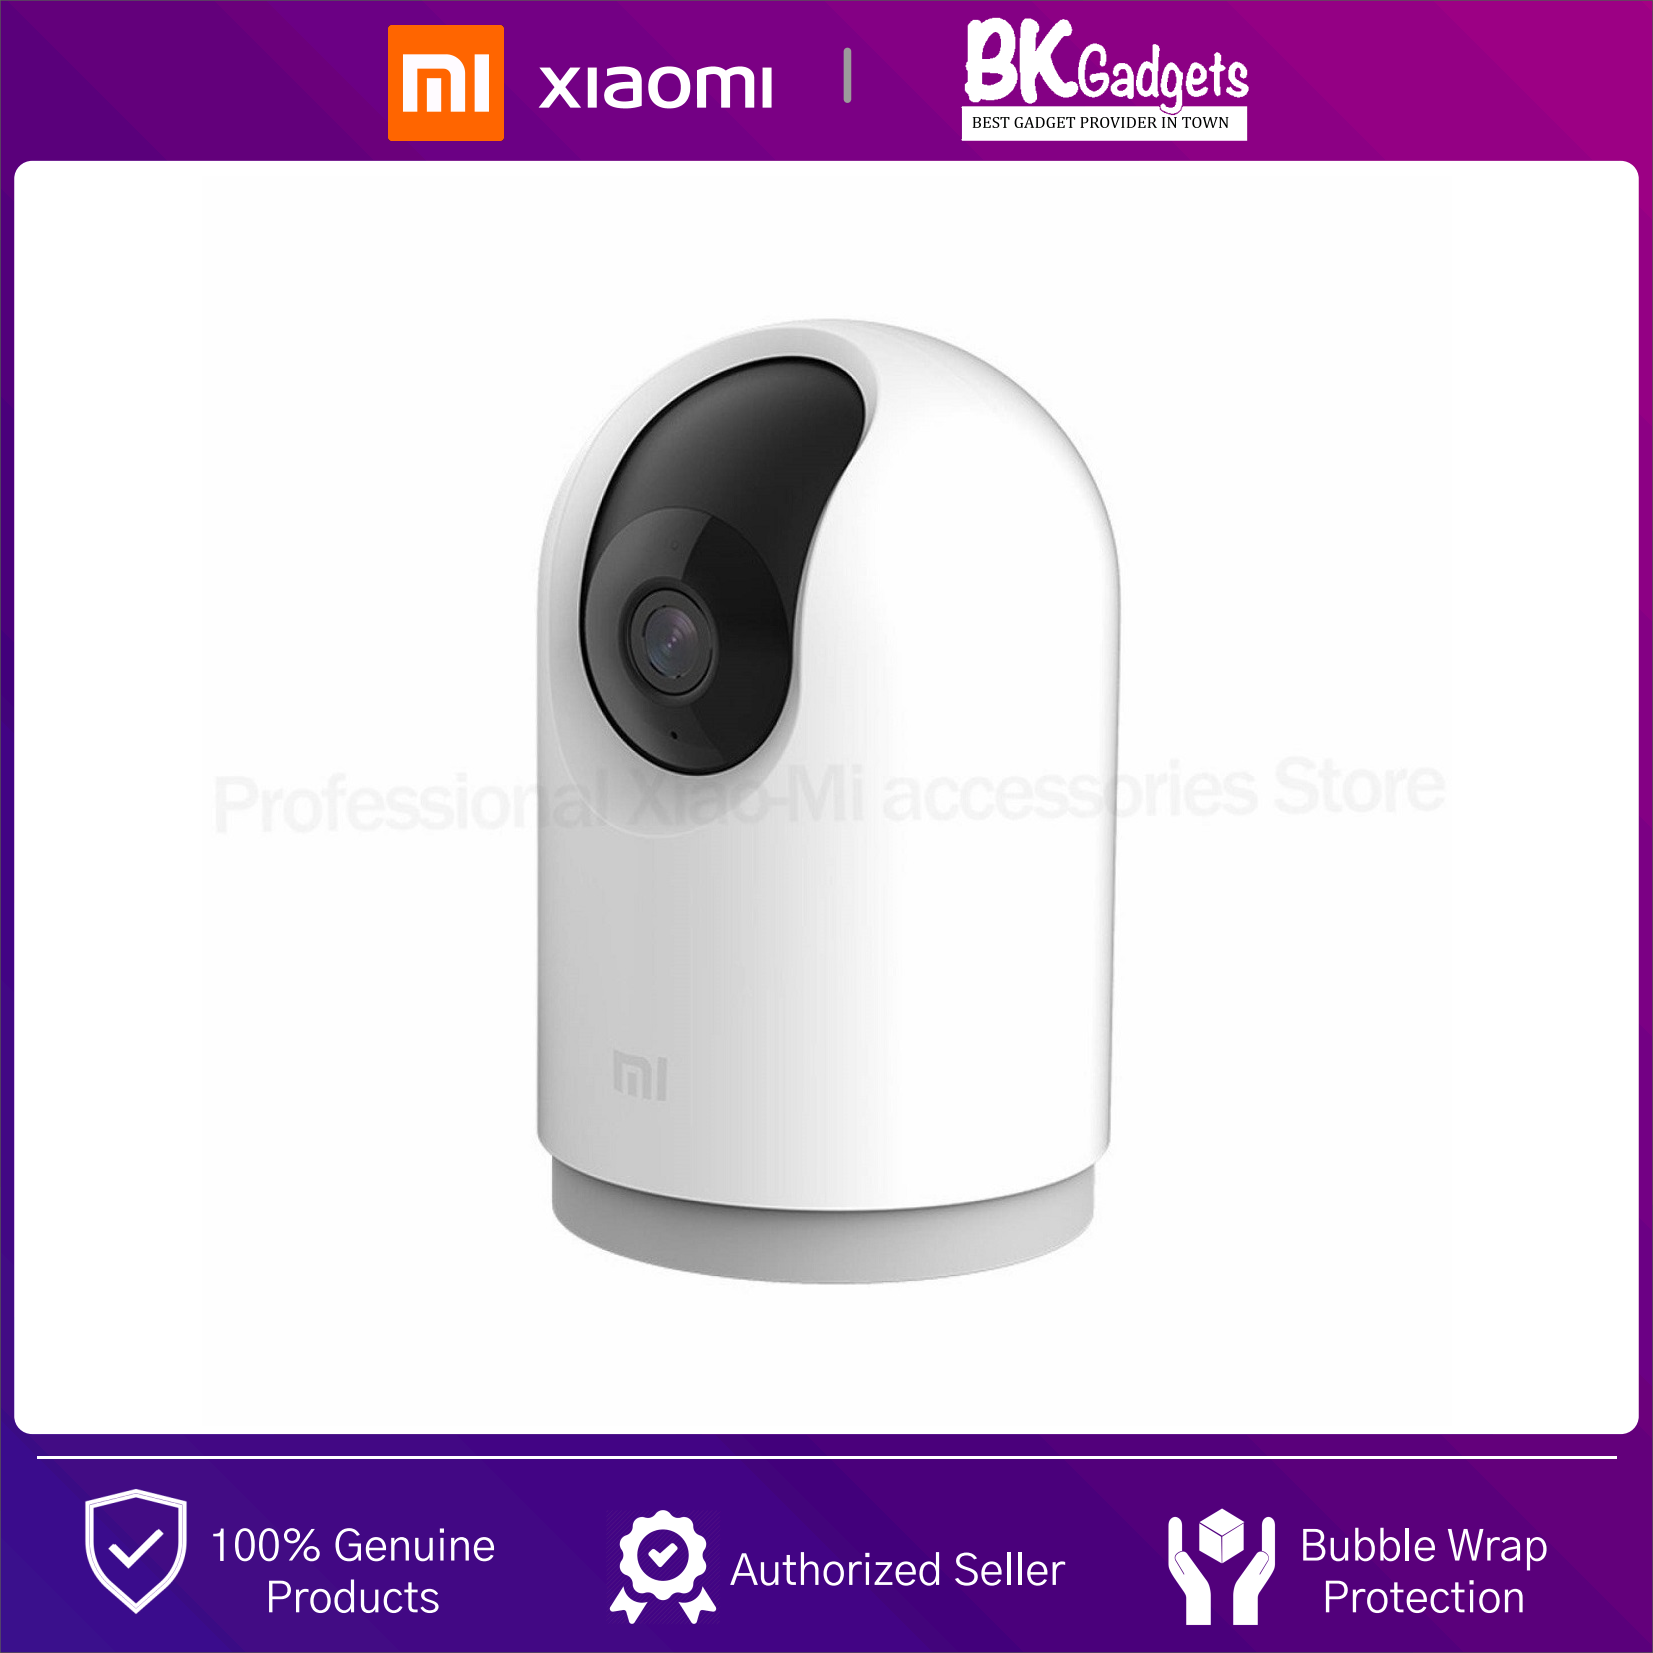 Xiaomi Mi 360 Home Security Camera 2K Pro - Smart IP Camera Ptz Pro 1296P 360 Panoramic 2K AI Detection Two-way Intercom WiFi Home Security For MI Home App